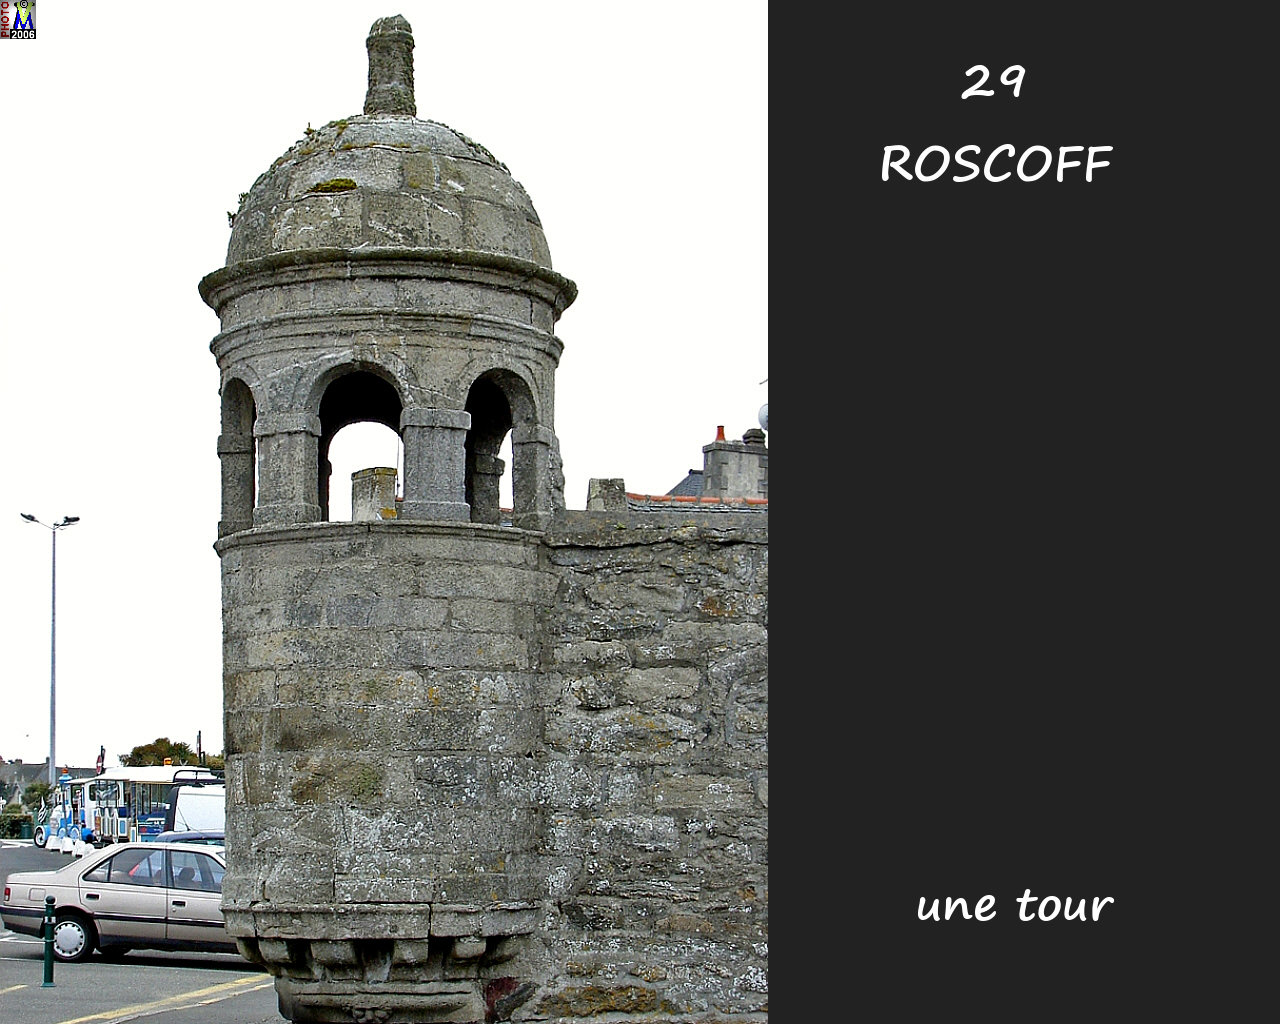 29ROSCOFF tour 102.jpg